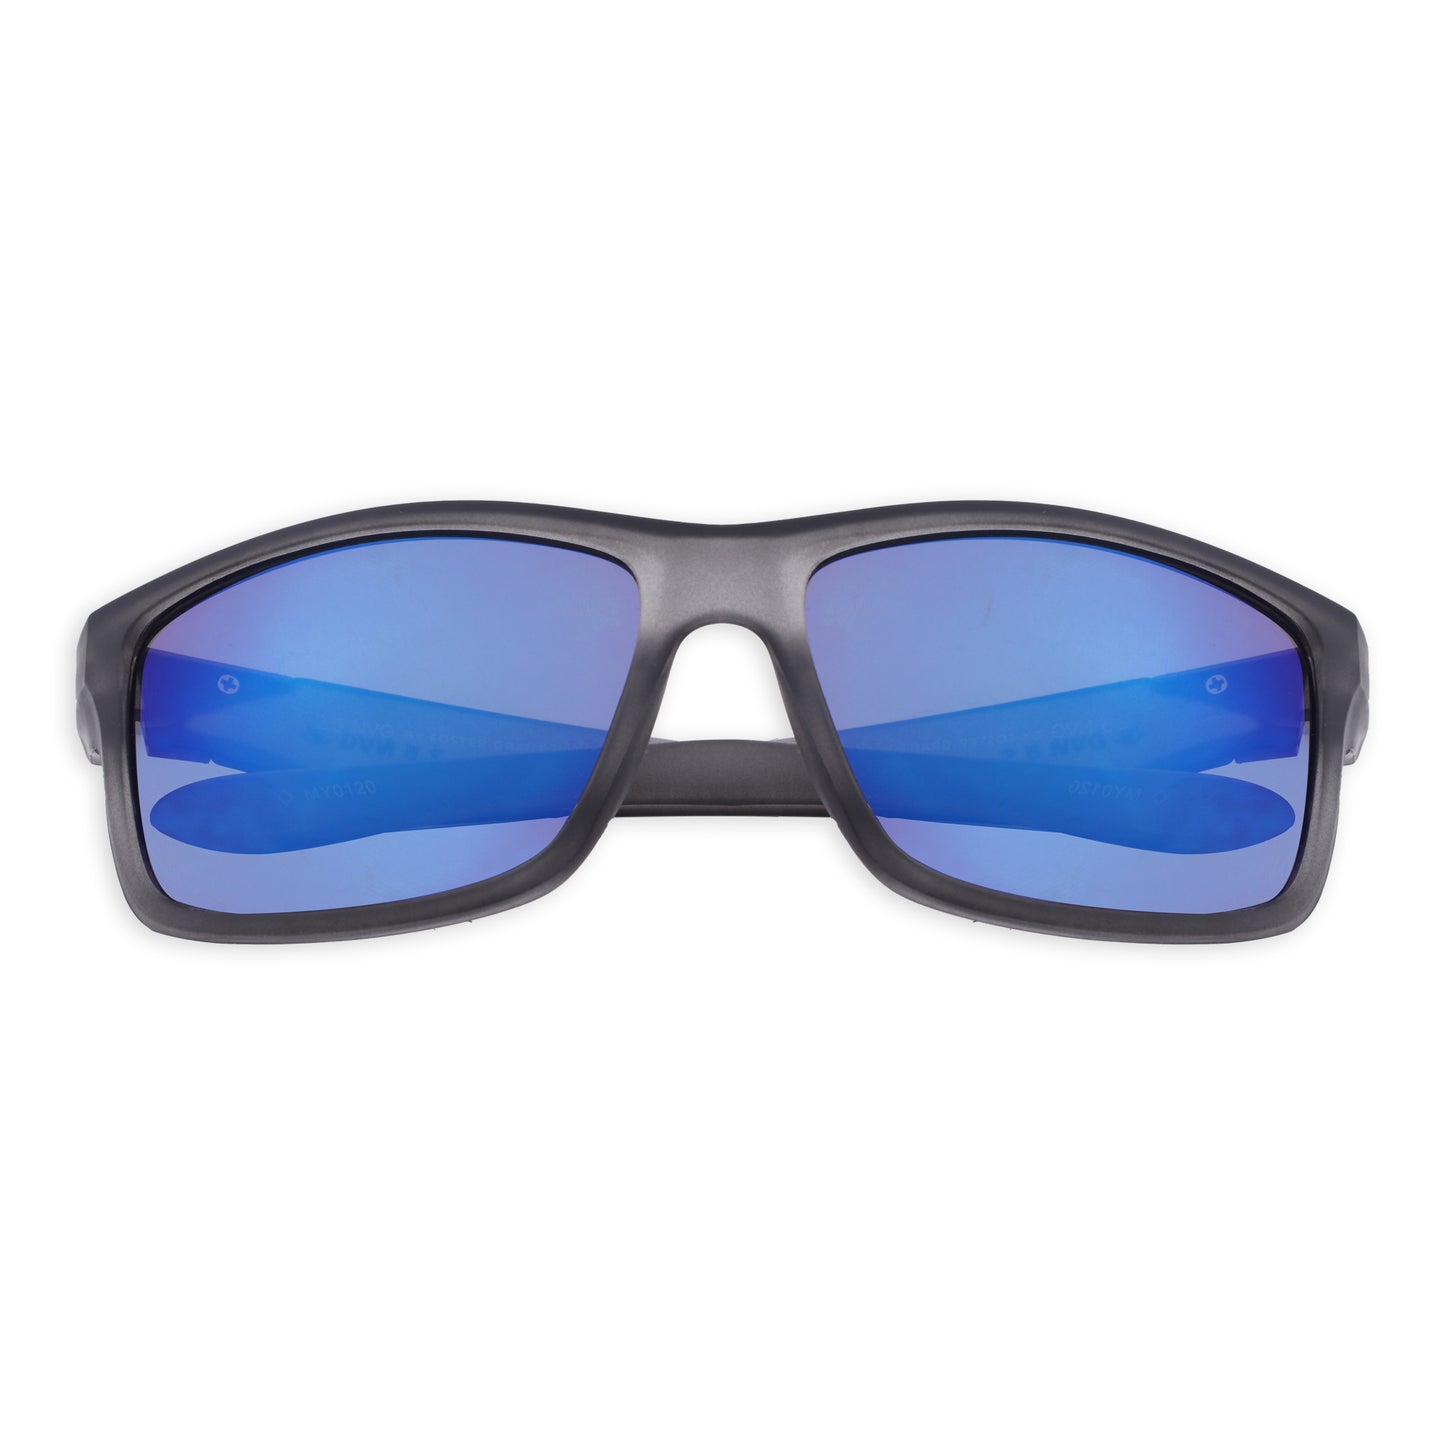 2.5 NVG UV Protected Matte Grey Blue Rectangular Sunglasses